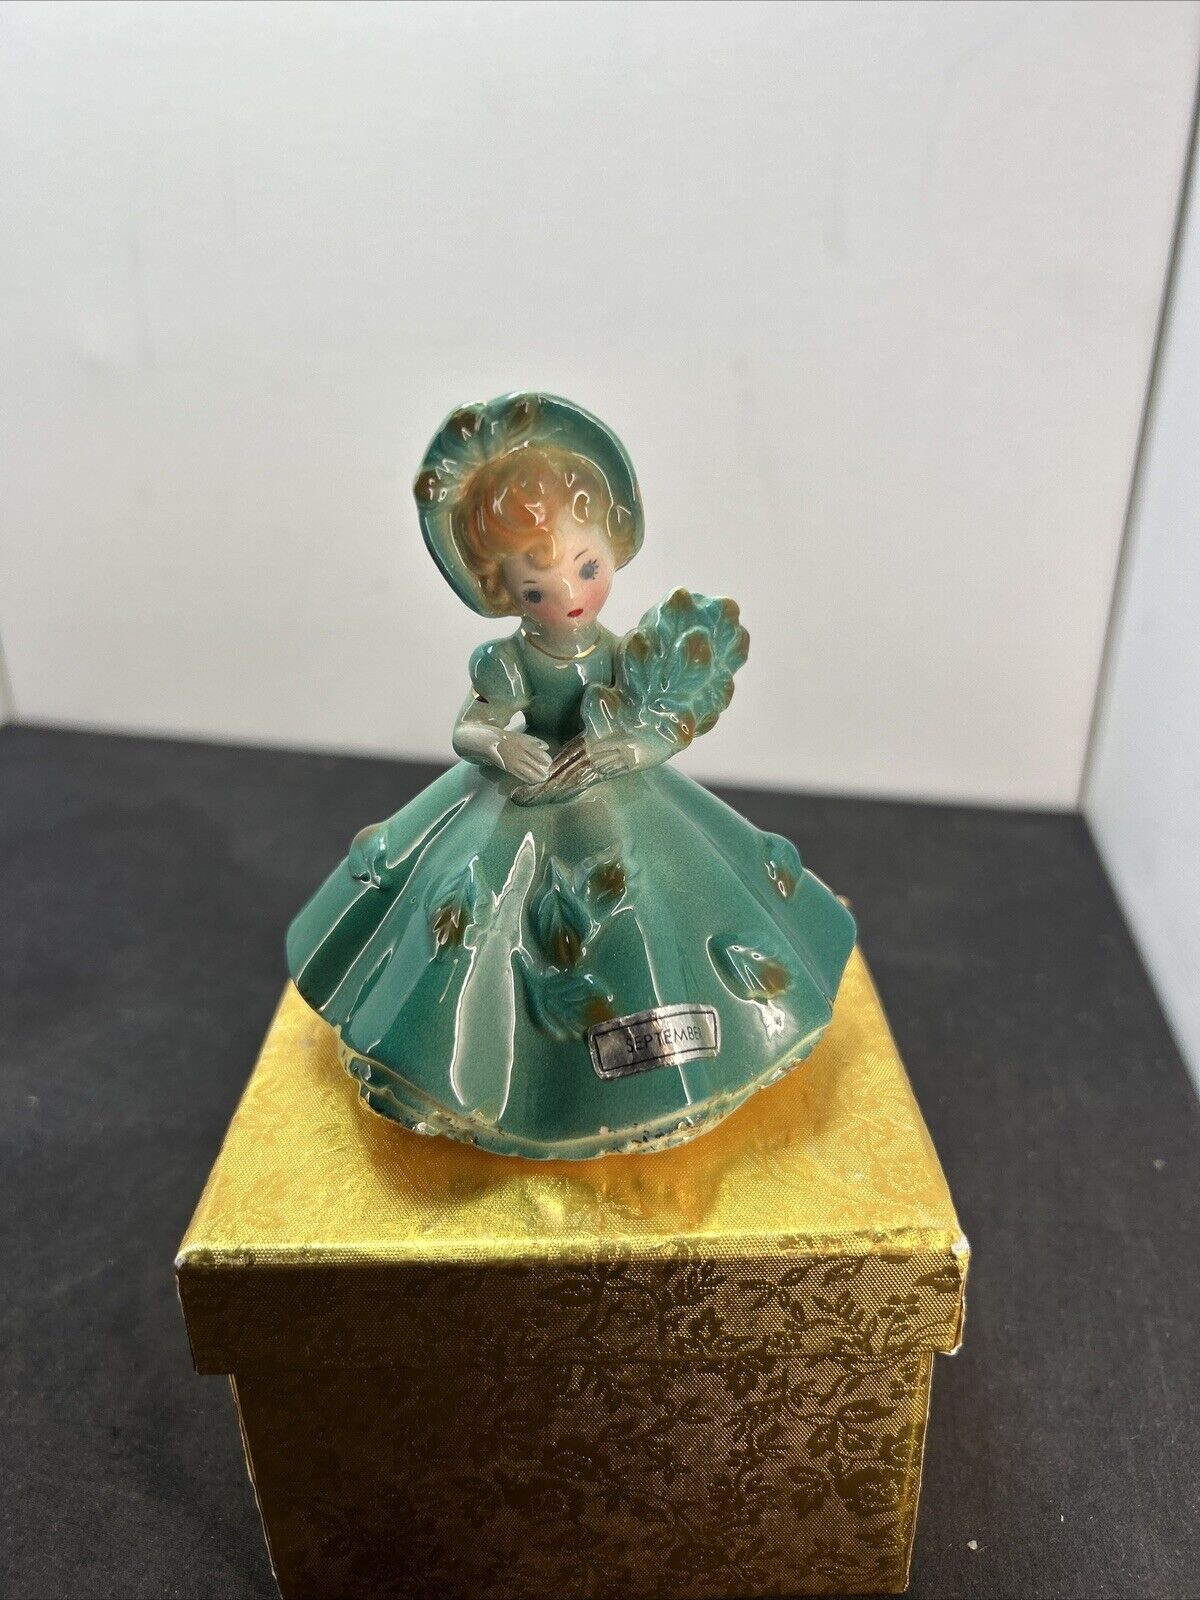 Josef Originals SEPTEMBER 1963 Birthday Dolls Series 4” Figurine Teal Dress (A)